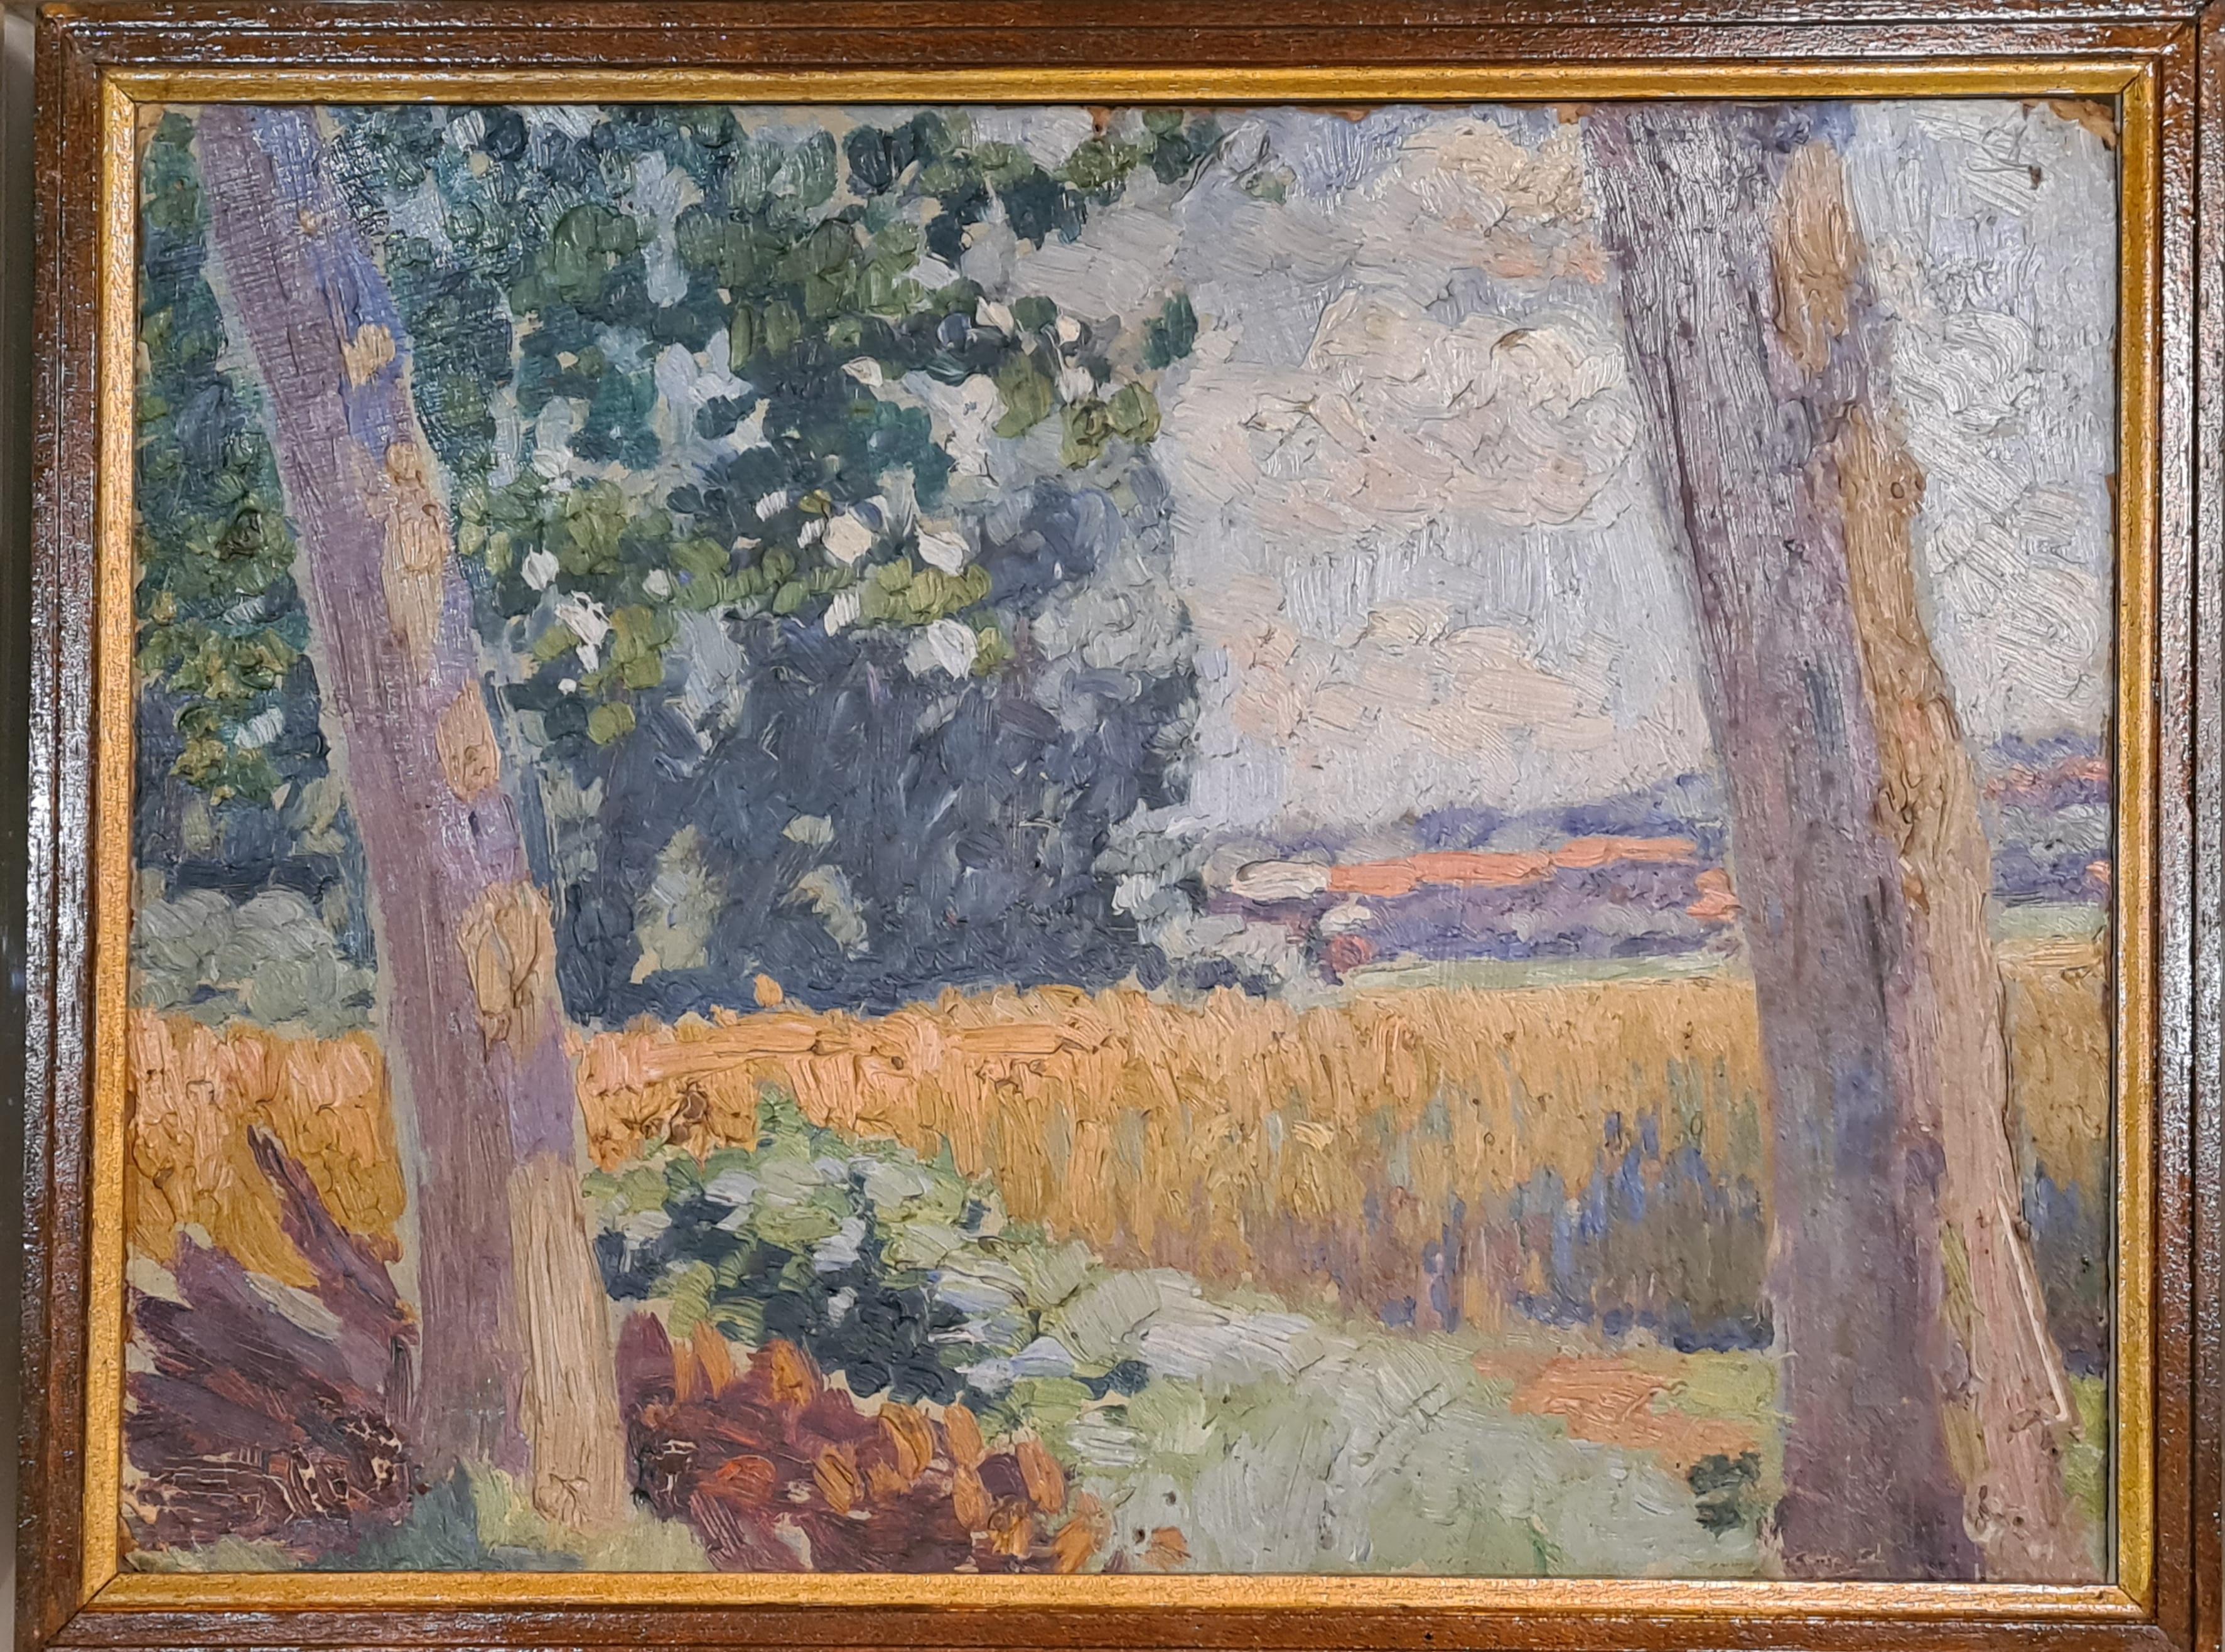 Michel Dufet Landscape Painting - Early 20th Century Barbizon School, The Cornfield, Oil on Board.